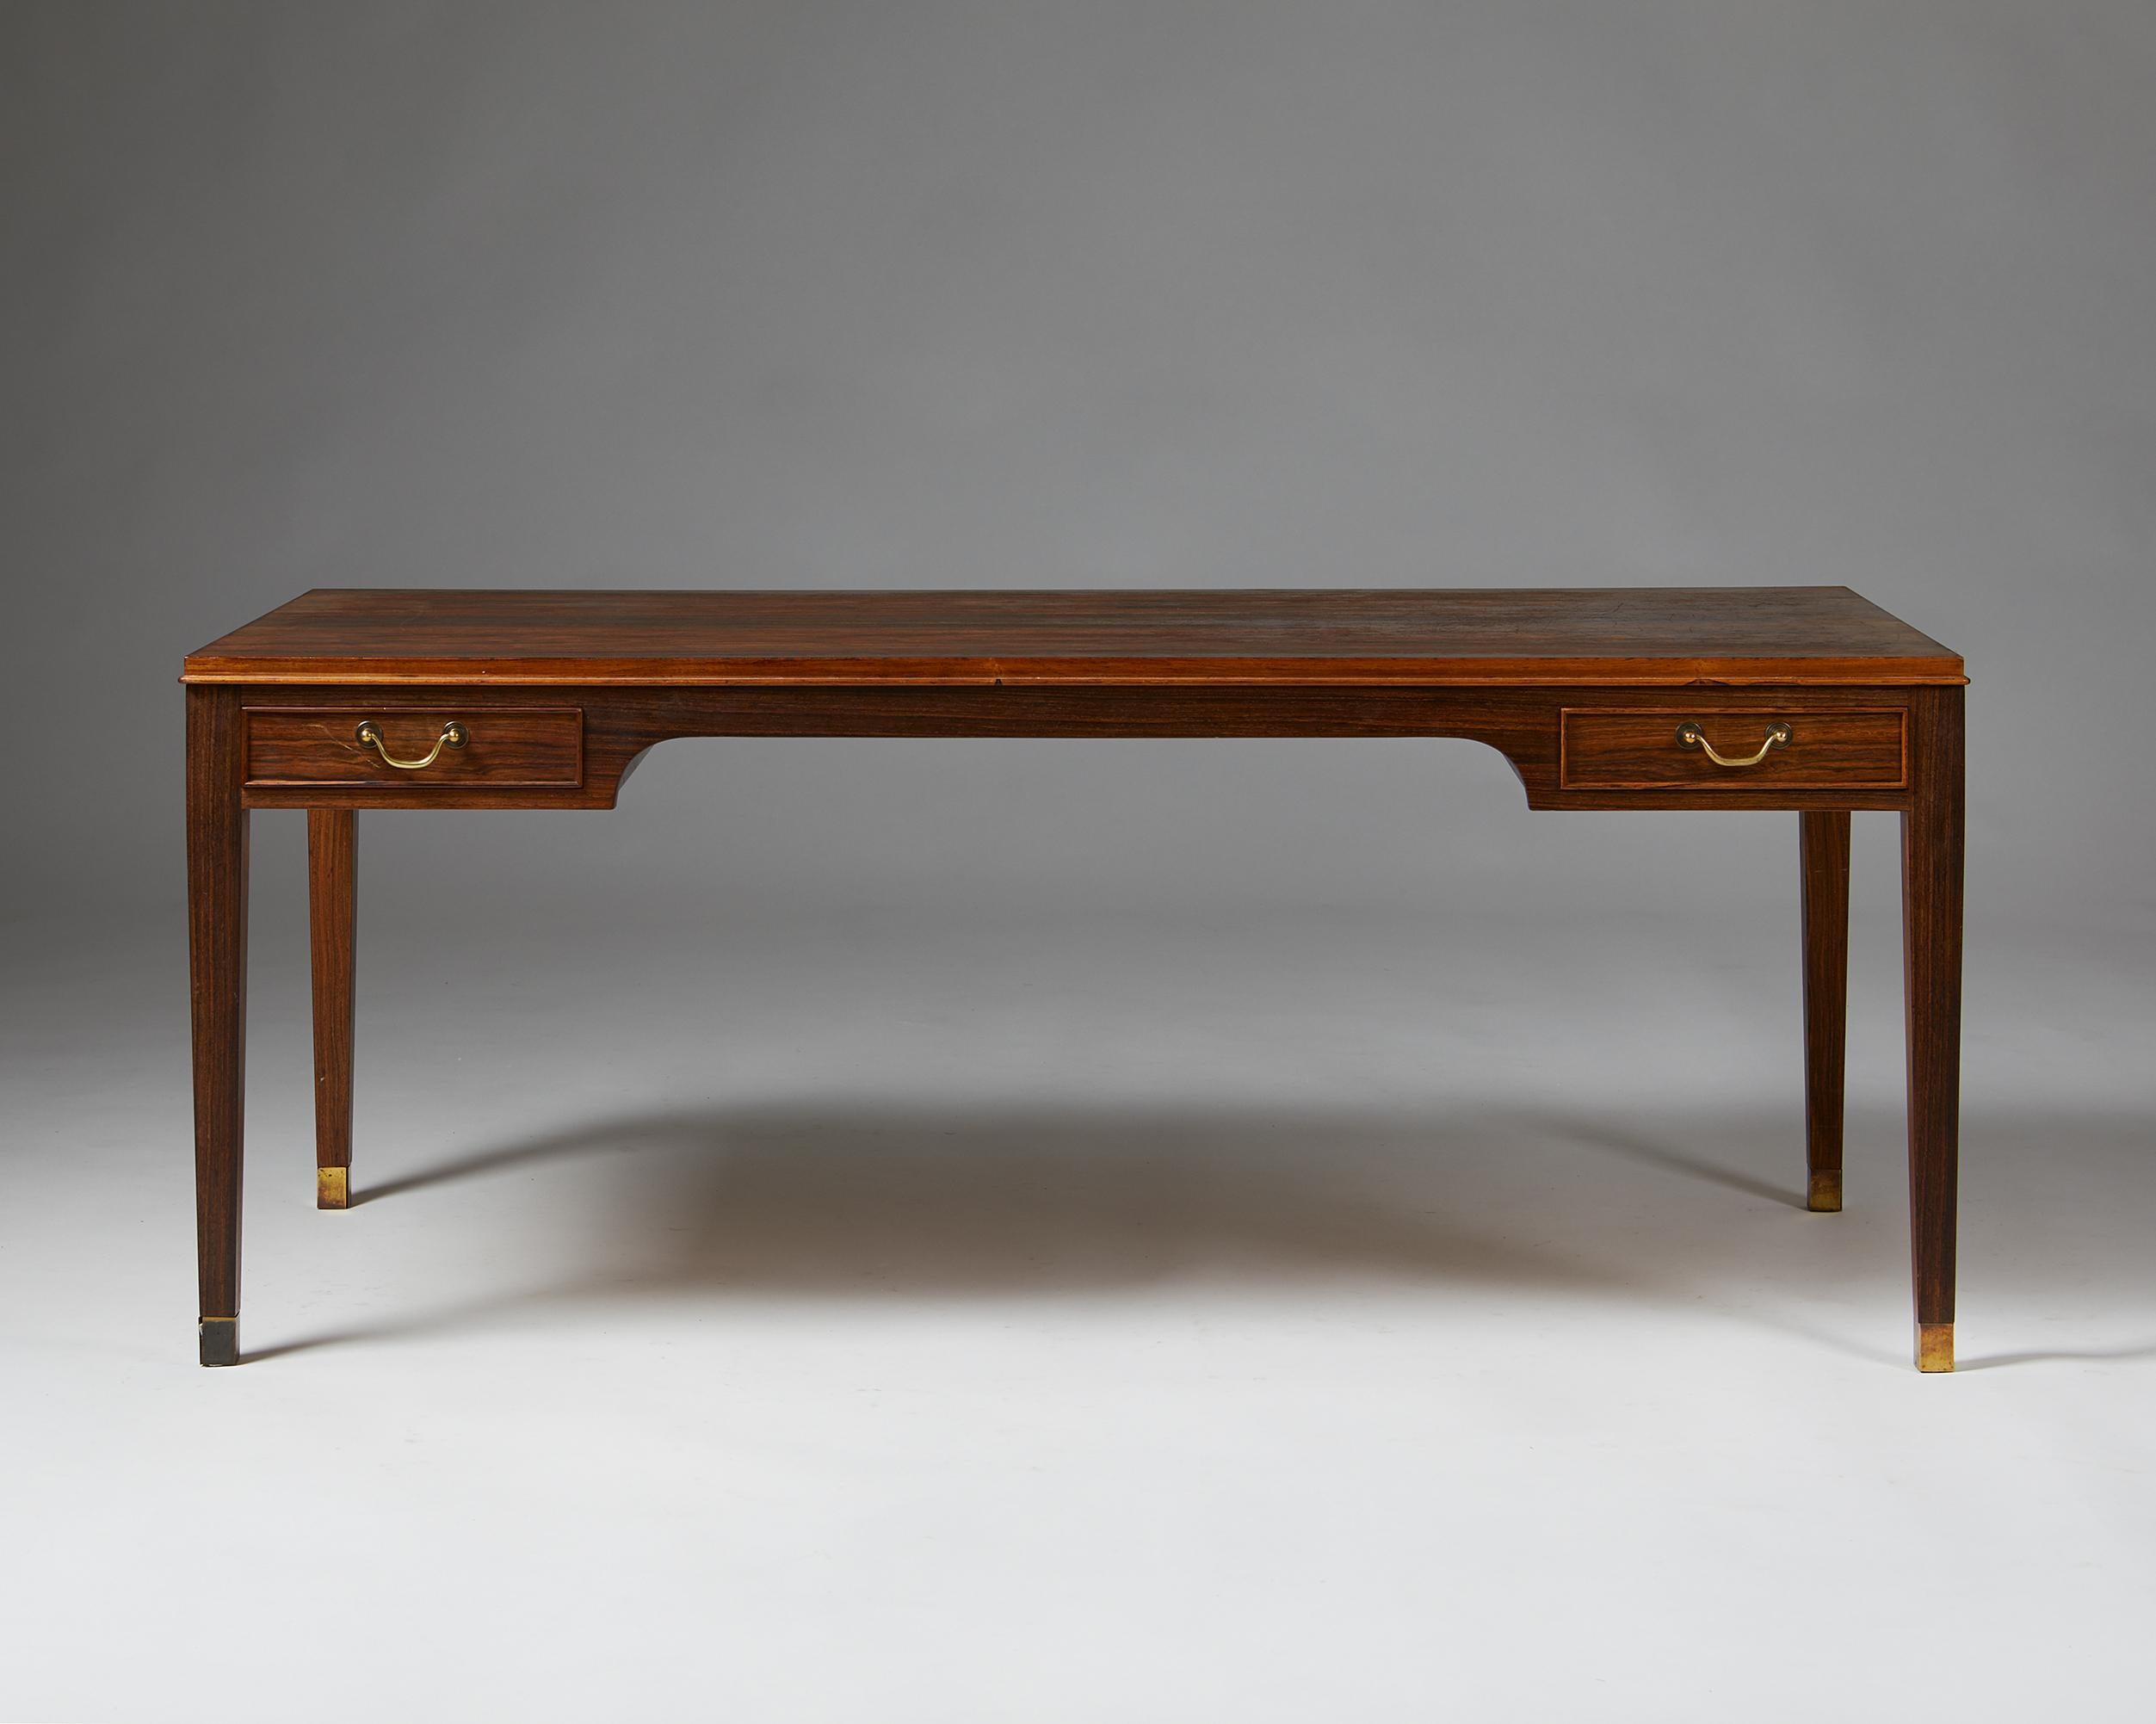 Swedish Occasional Table Designed by Frits Henningsen, Denmark, 1940's